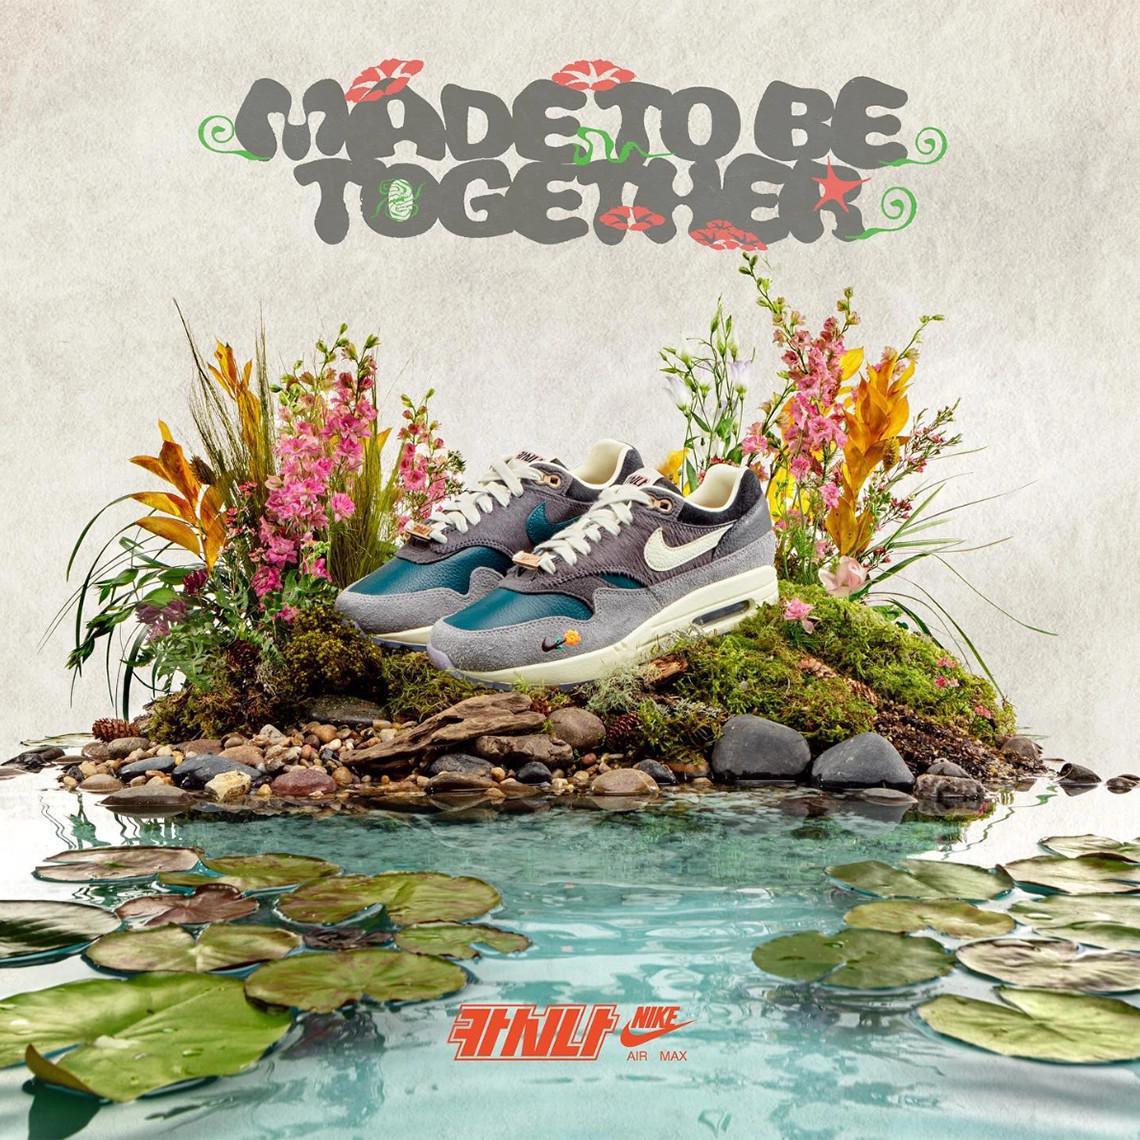 Kasina x Nike Air Max 1 "Made To Be Together" dont la sortie est prévue en juin